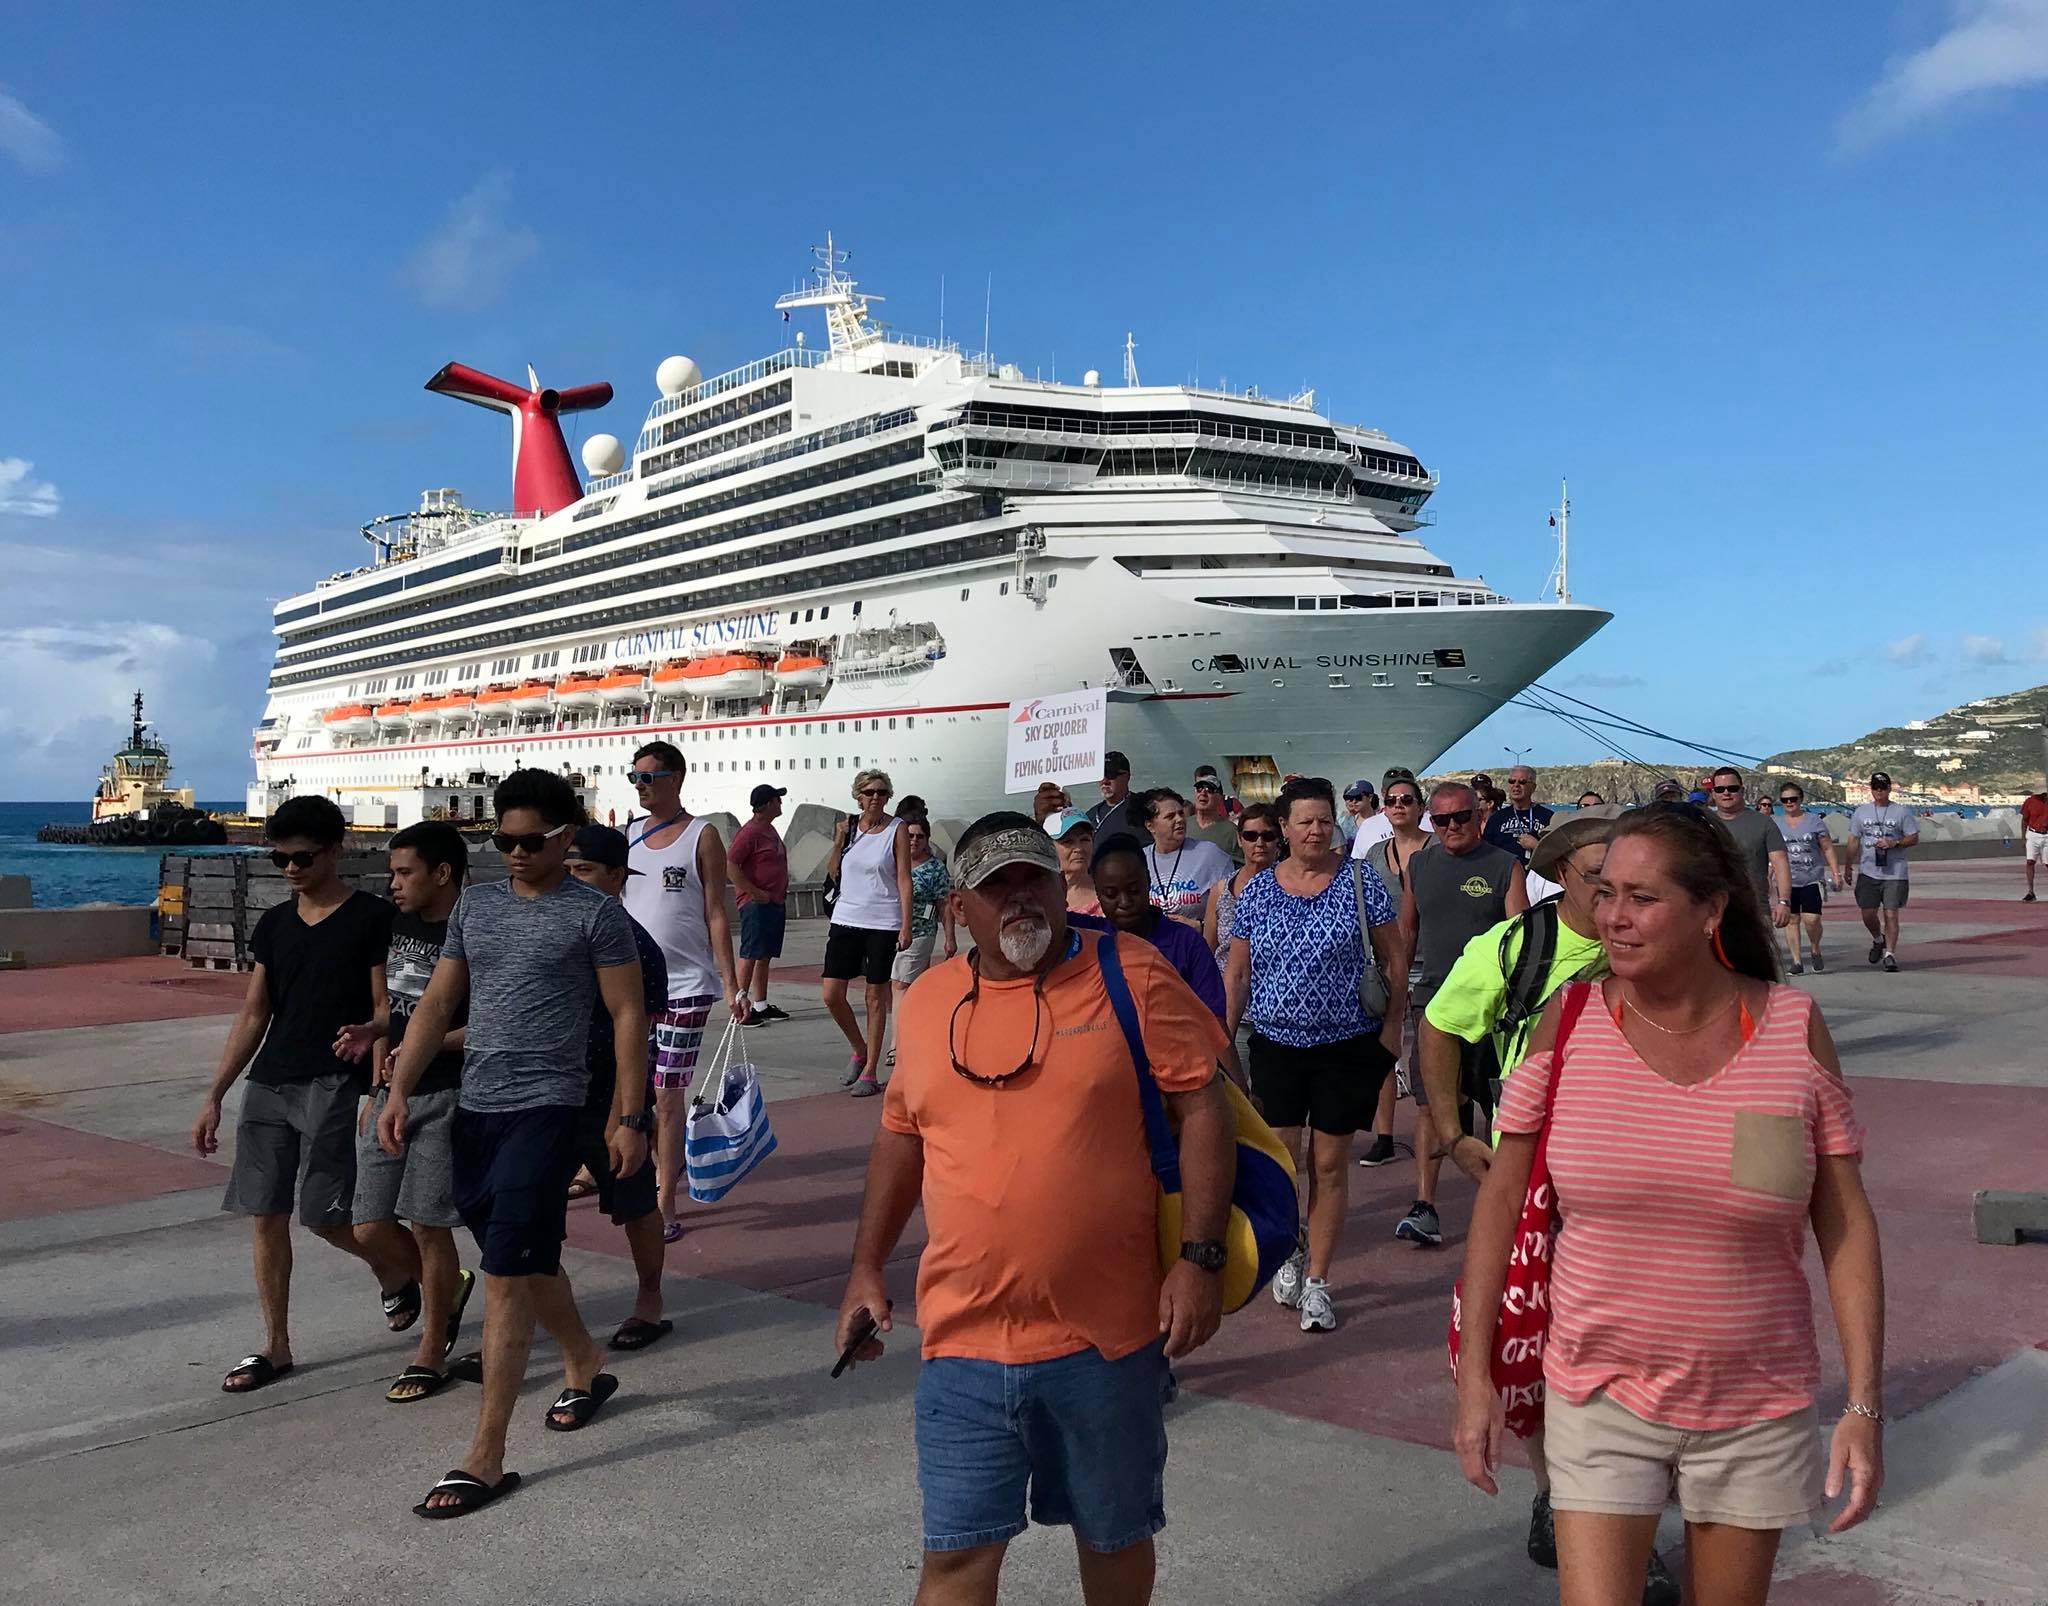 Carnival Sunshine with passengers disembarking